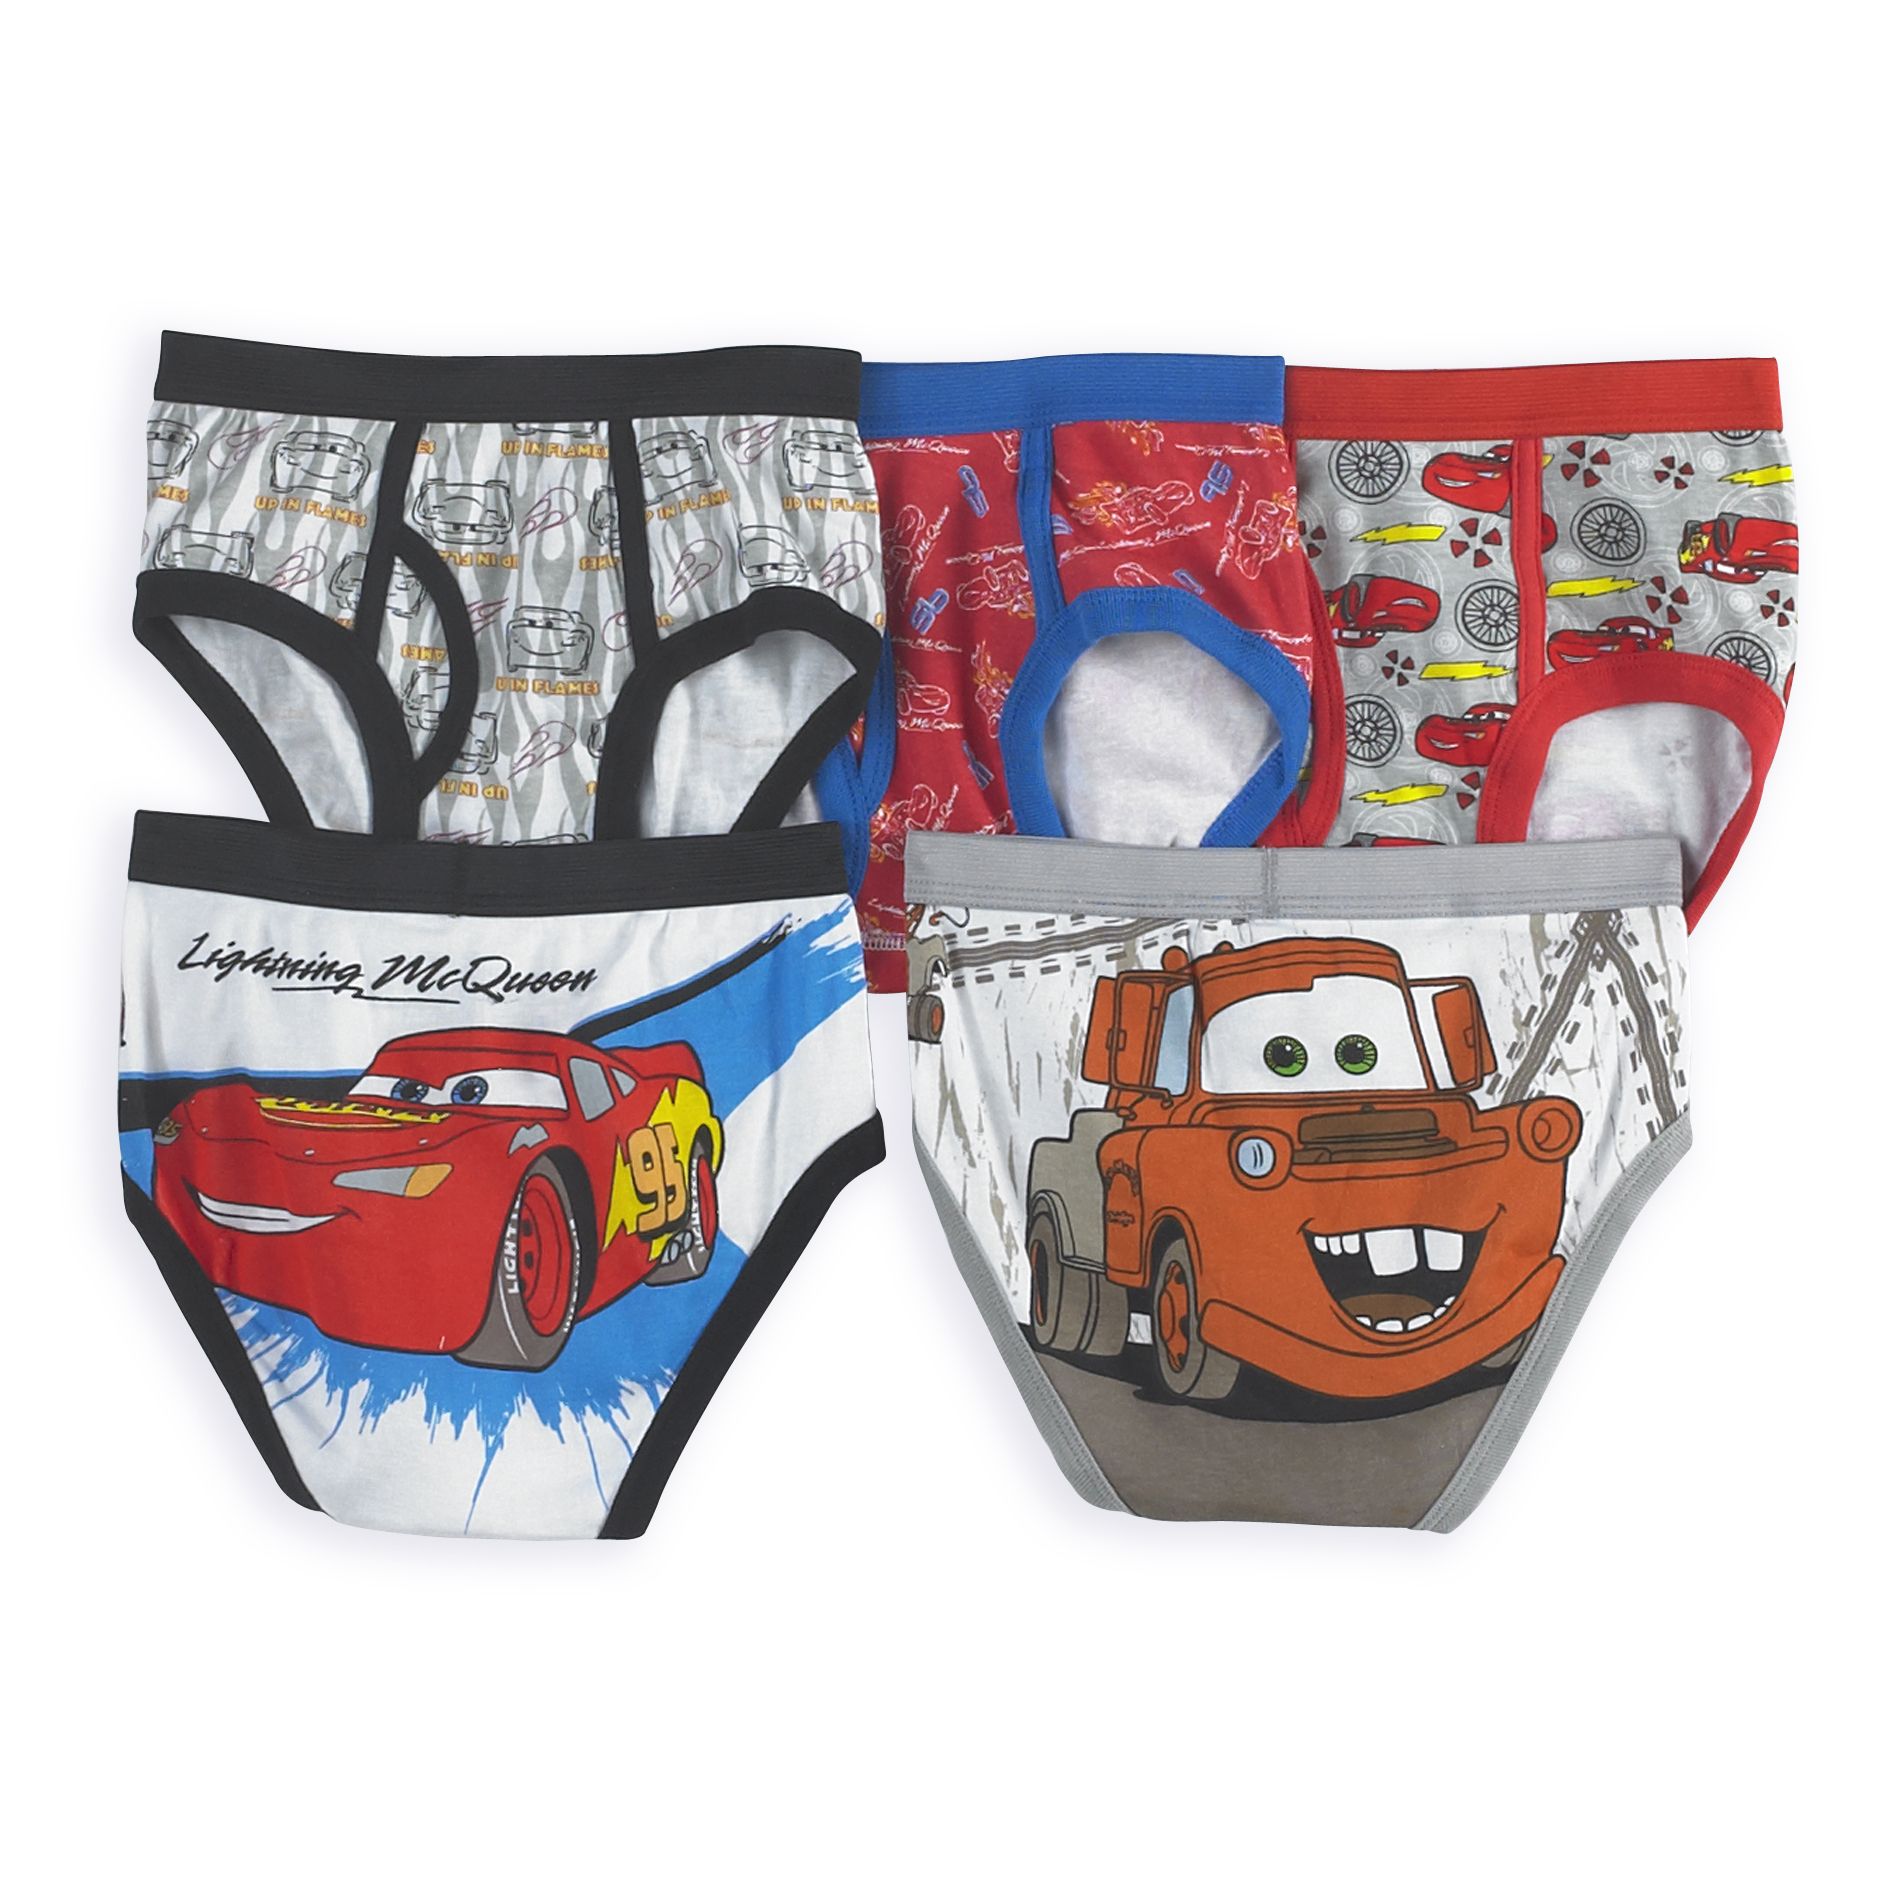 DisneyPixar Cars Boy’s Underwear ’Cars’ 5pk Briefs